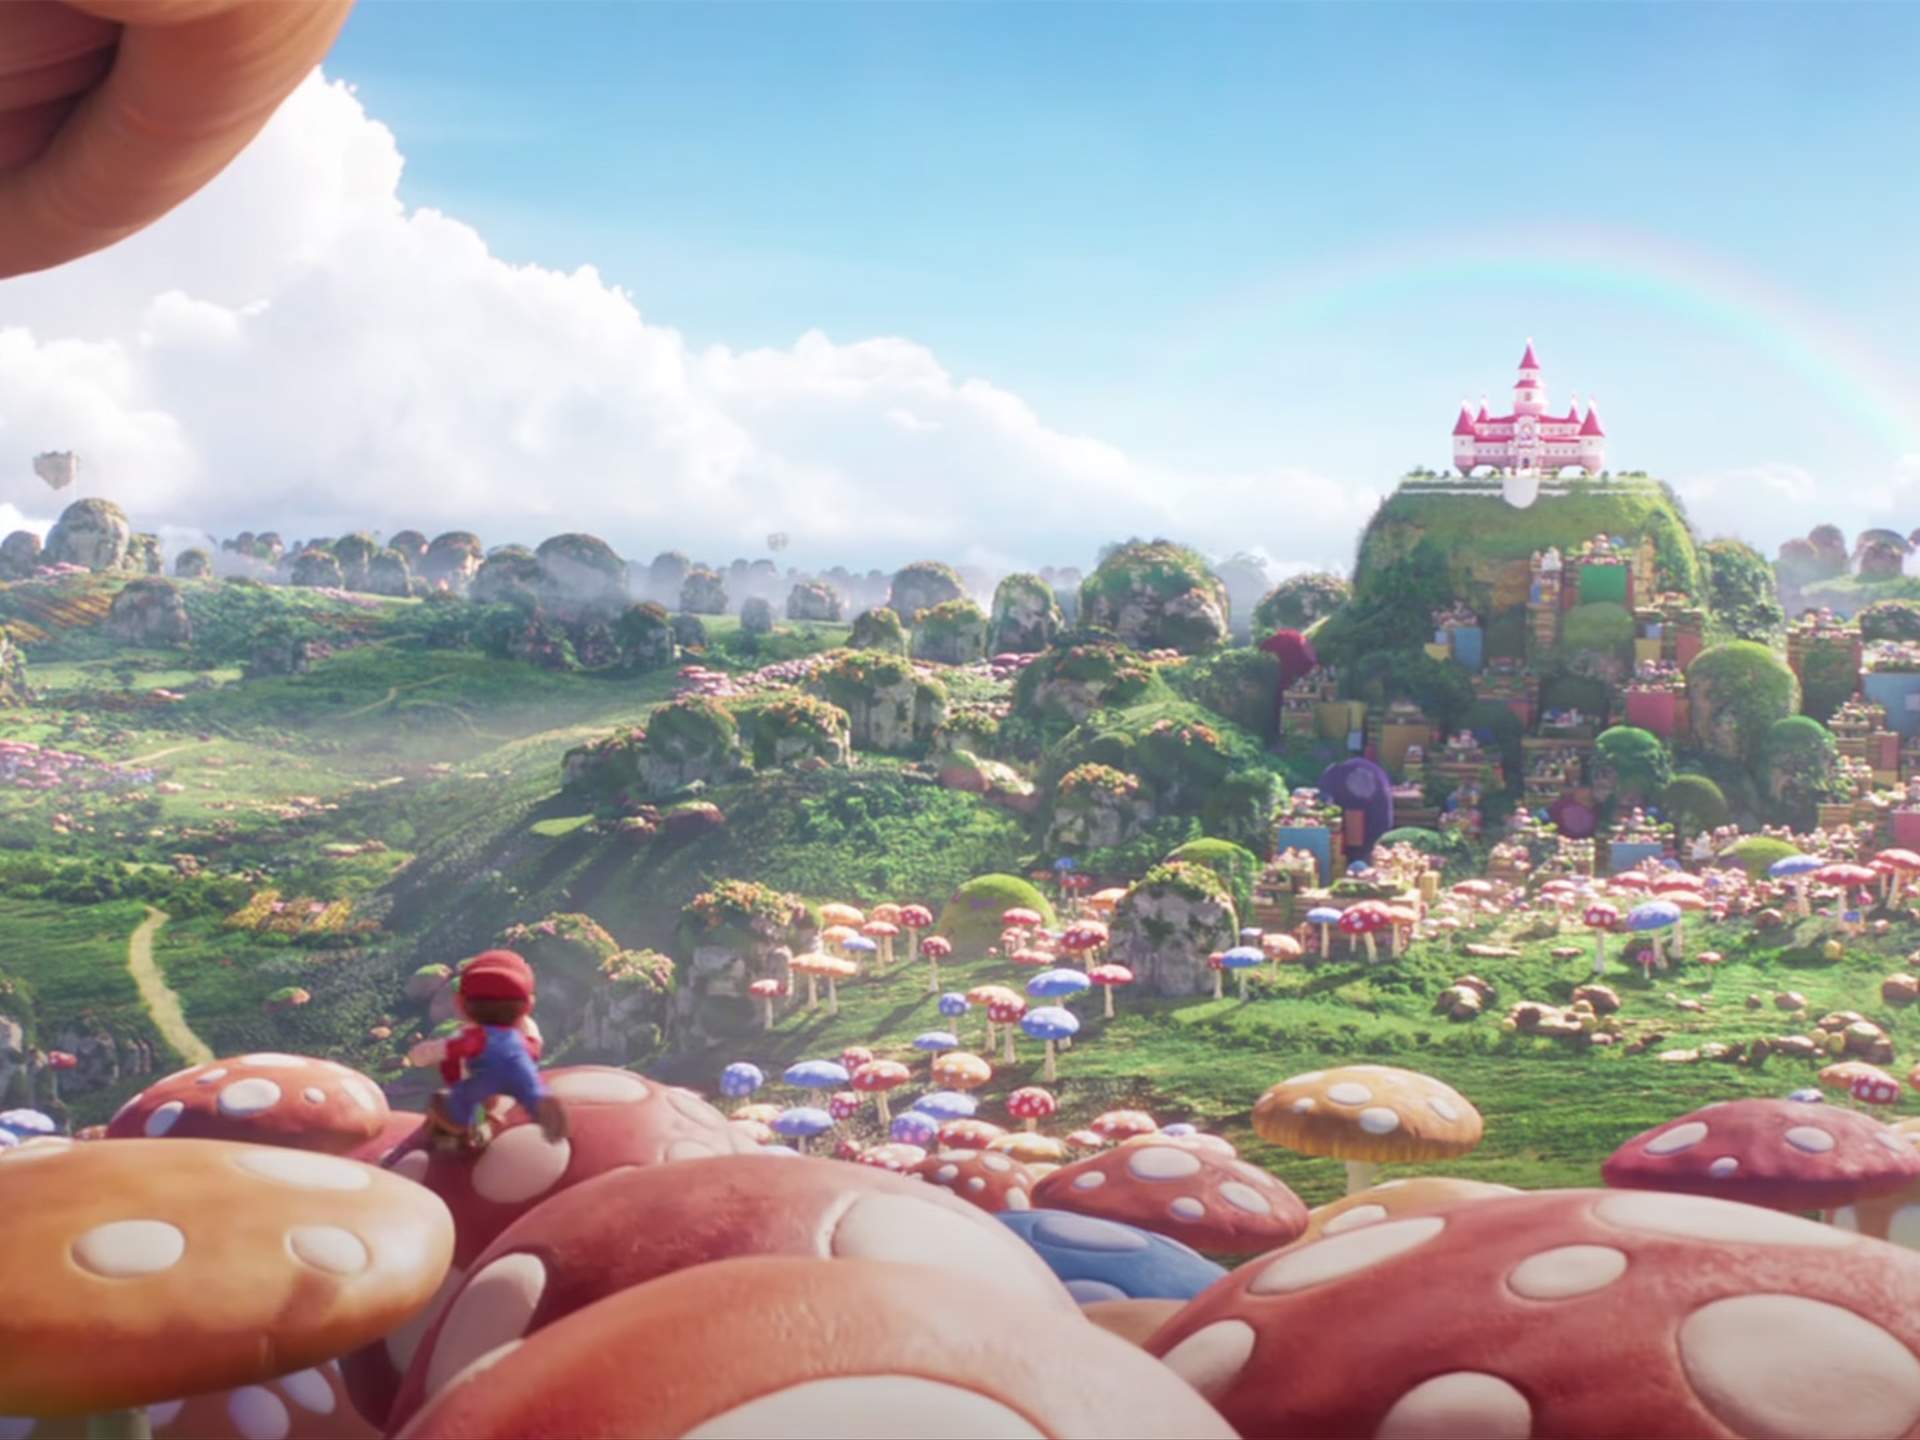 Watch Or Stream The Super Mario Bros. Movie Sneak Peek